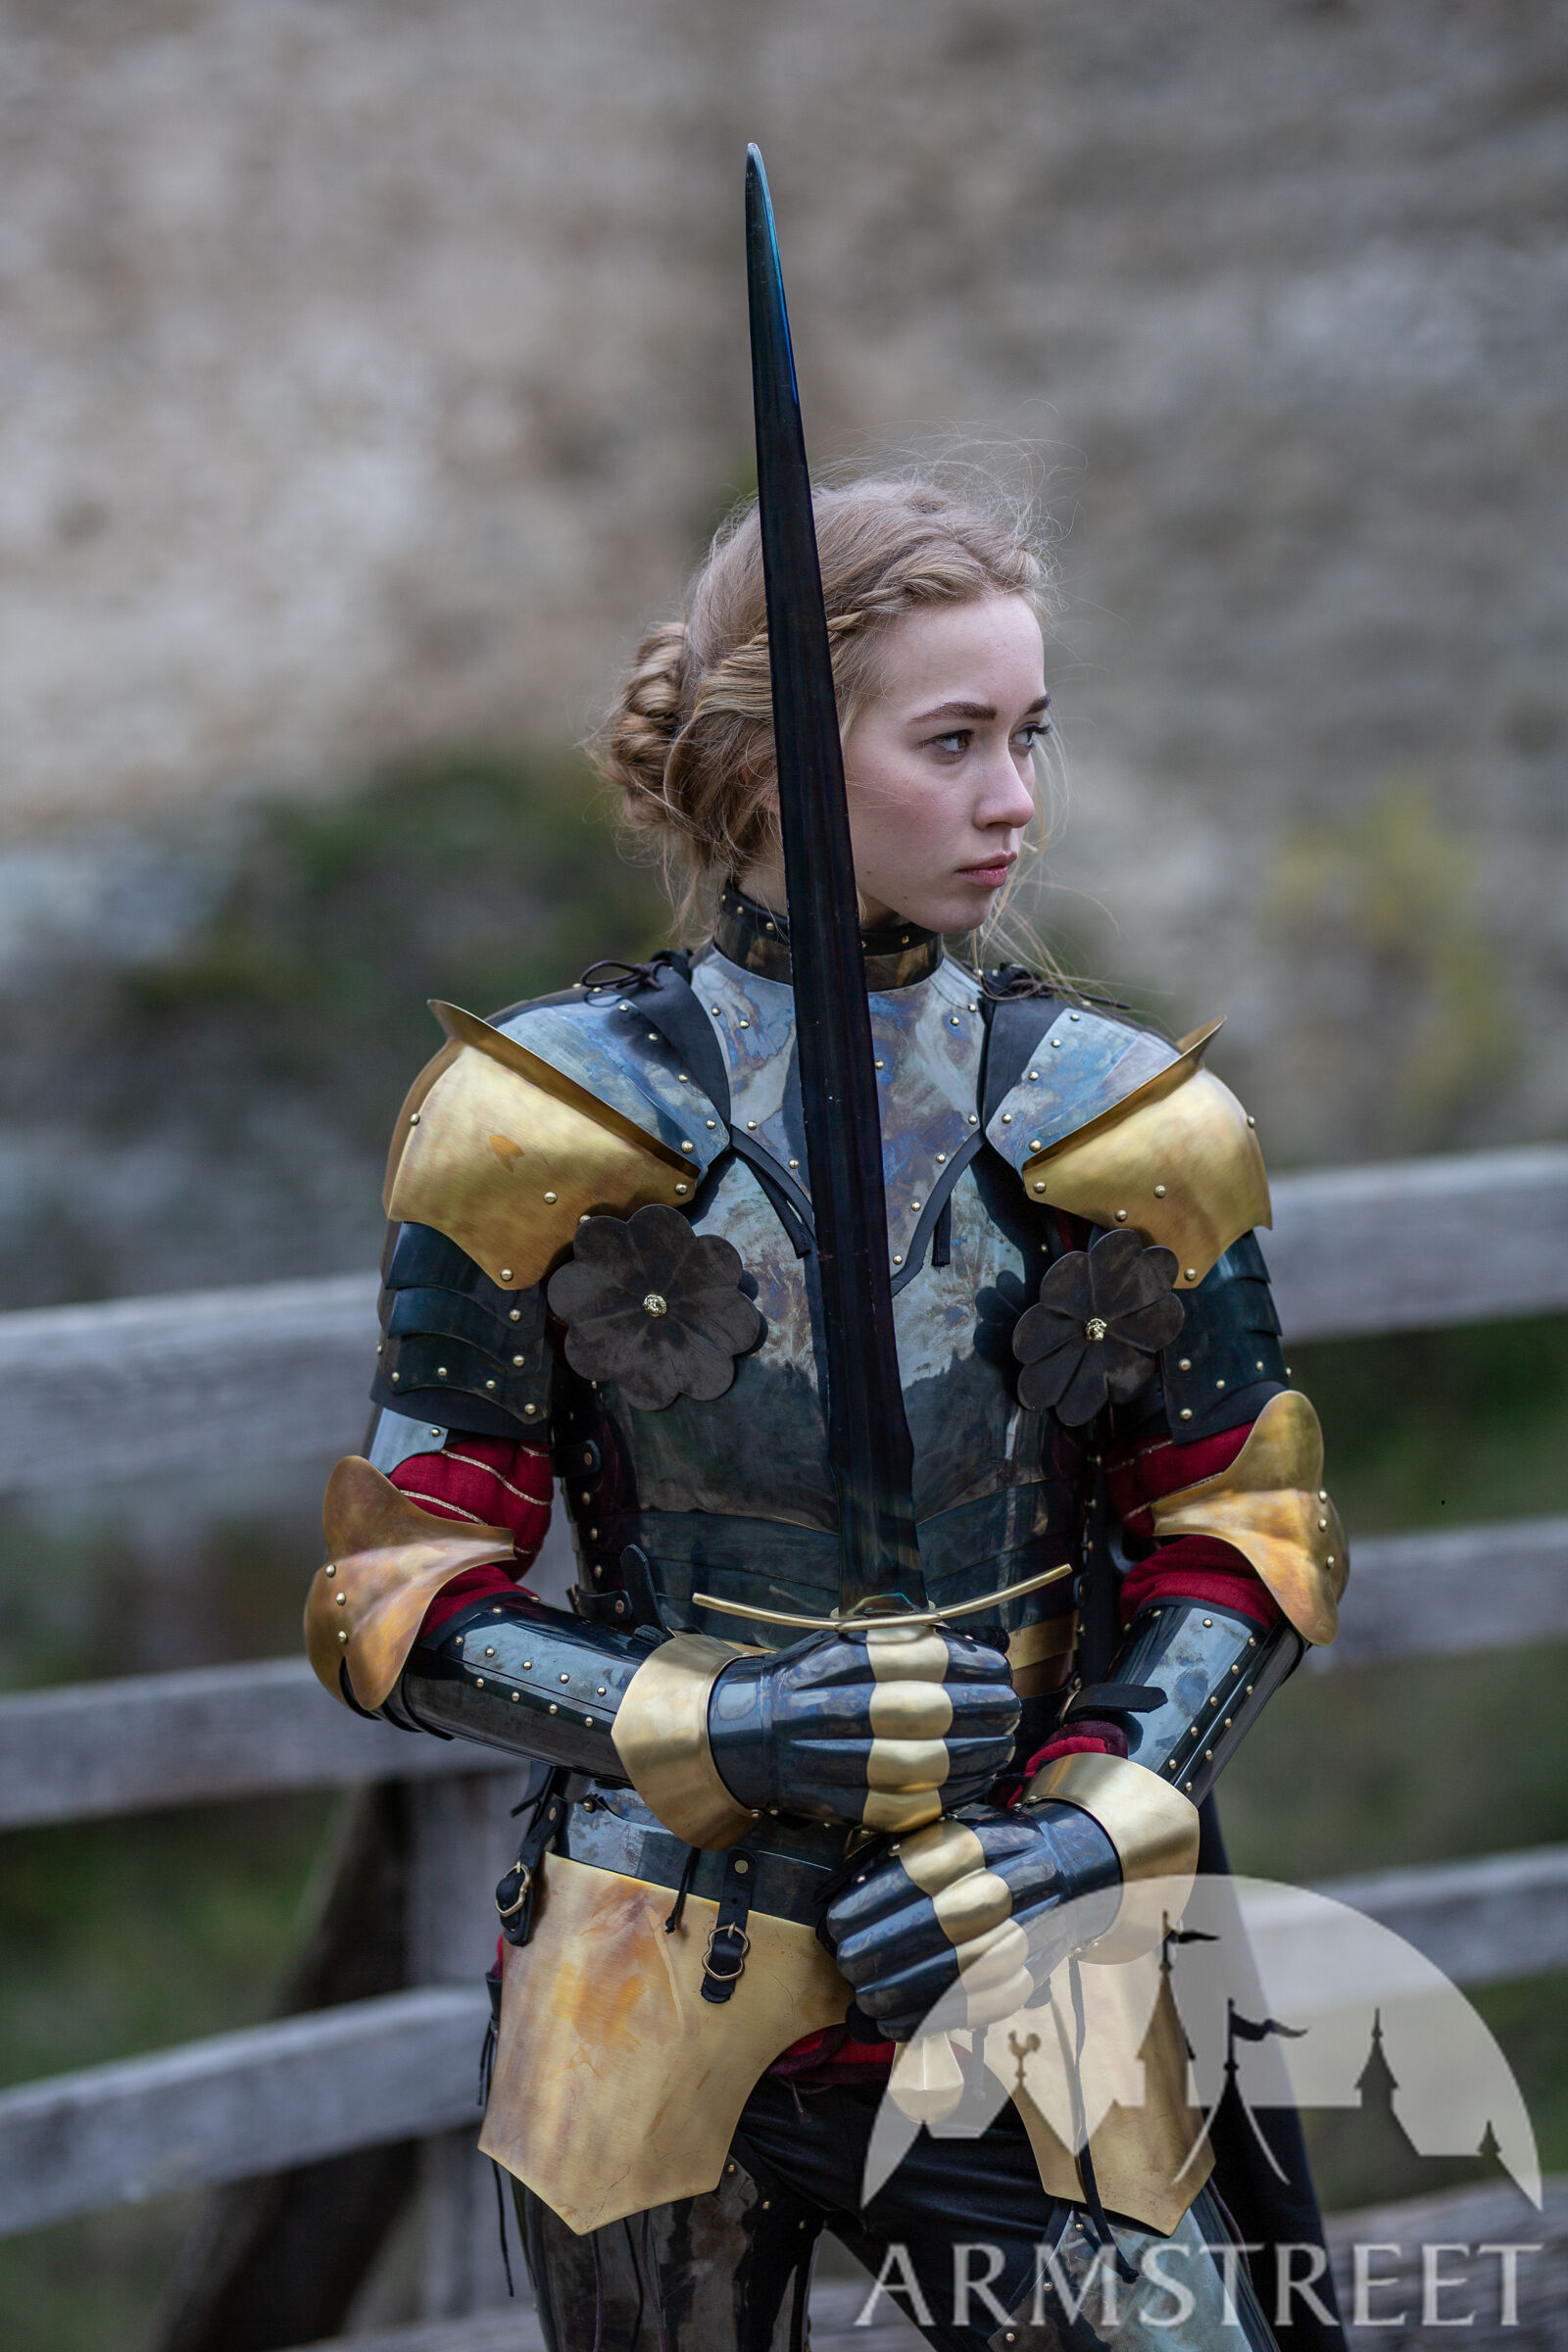 Blackened lightweight medieval female armor “Evening Star”